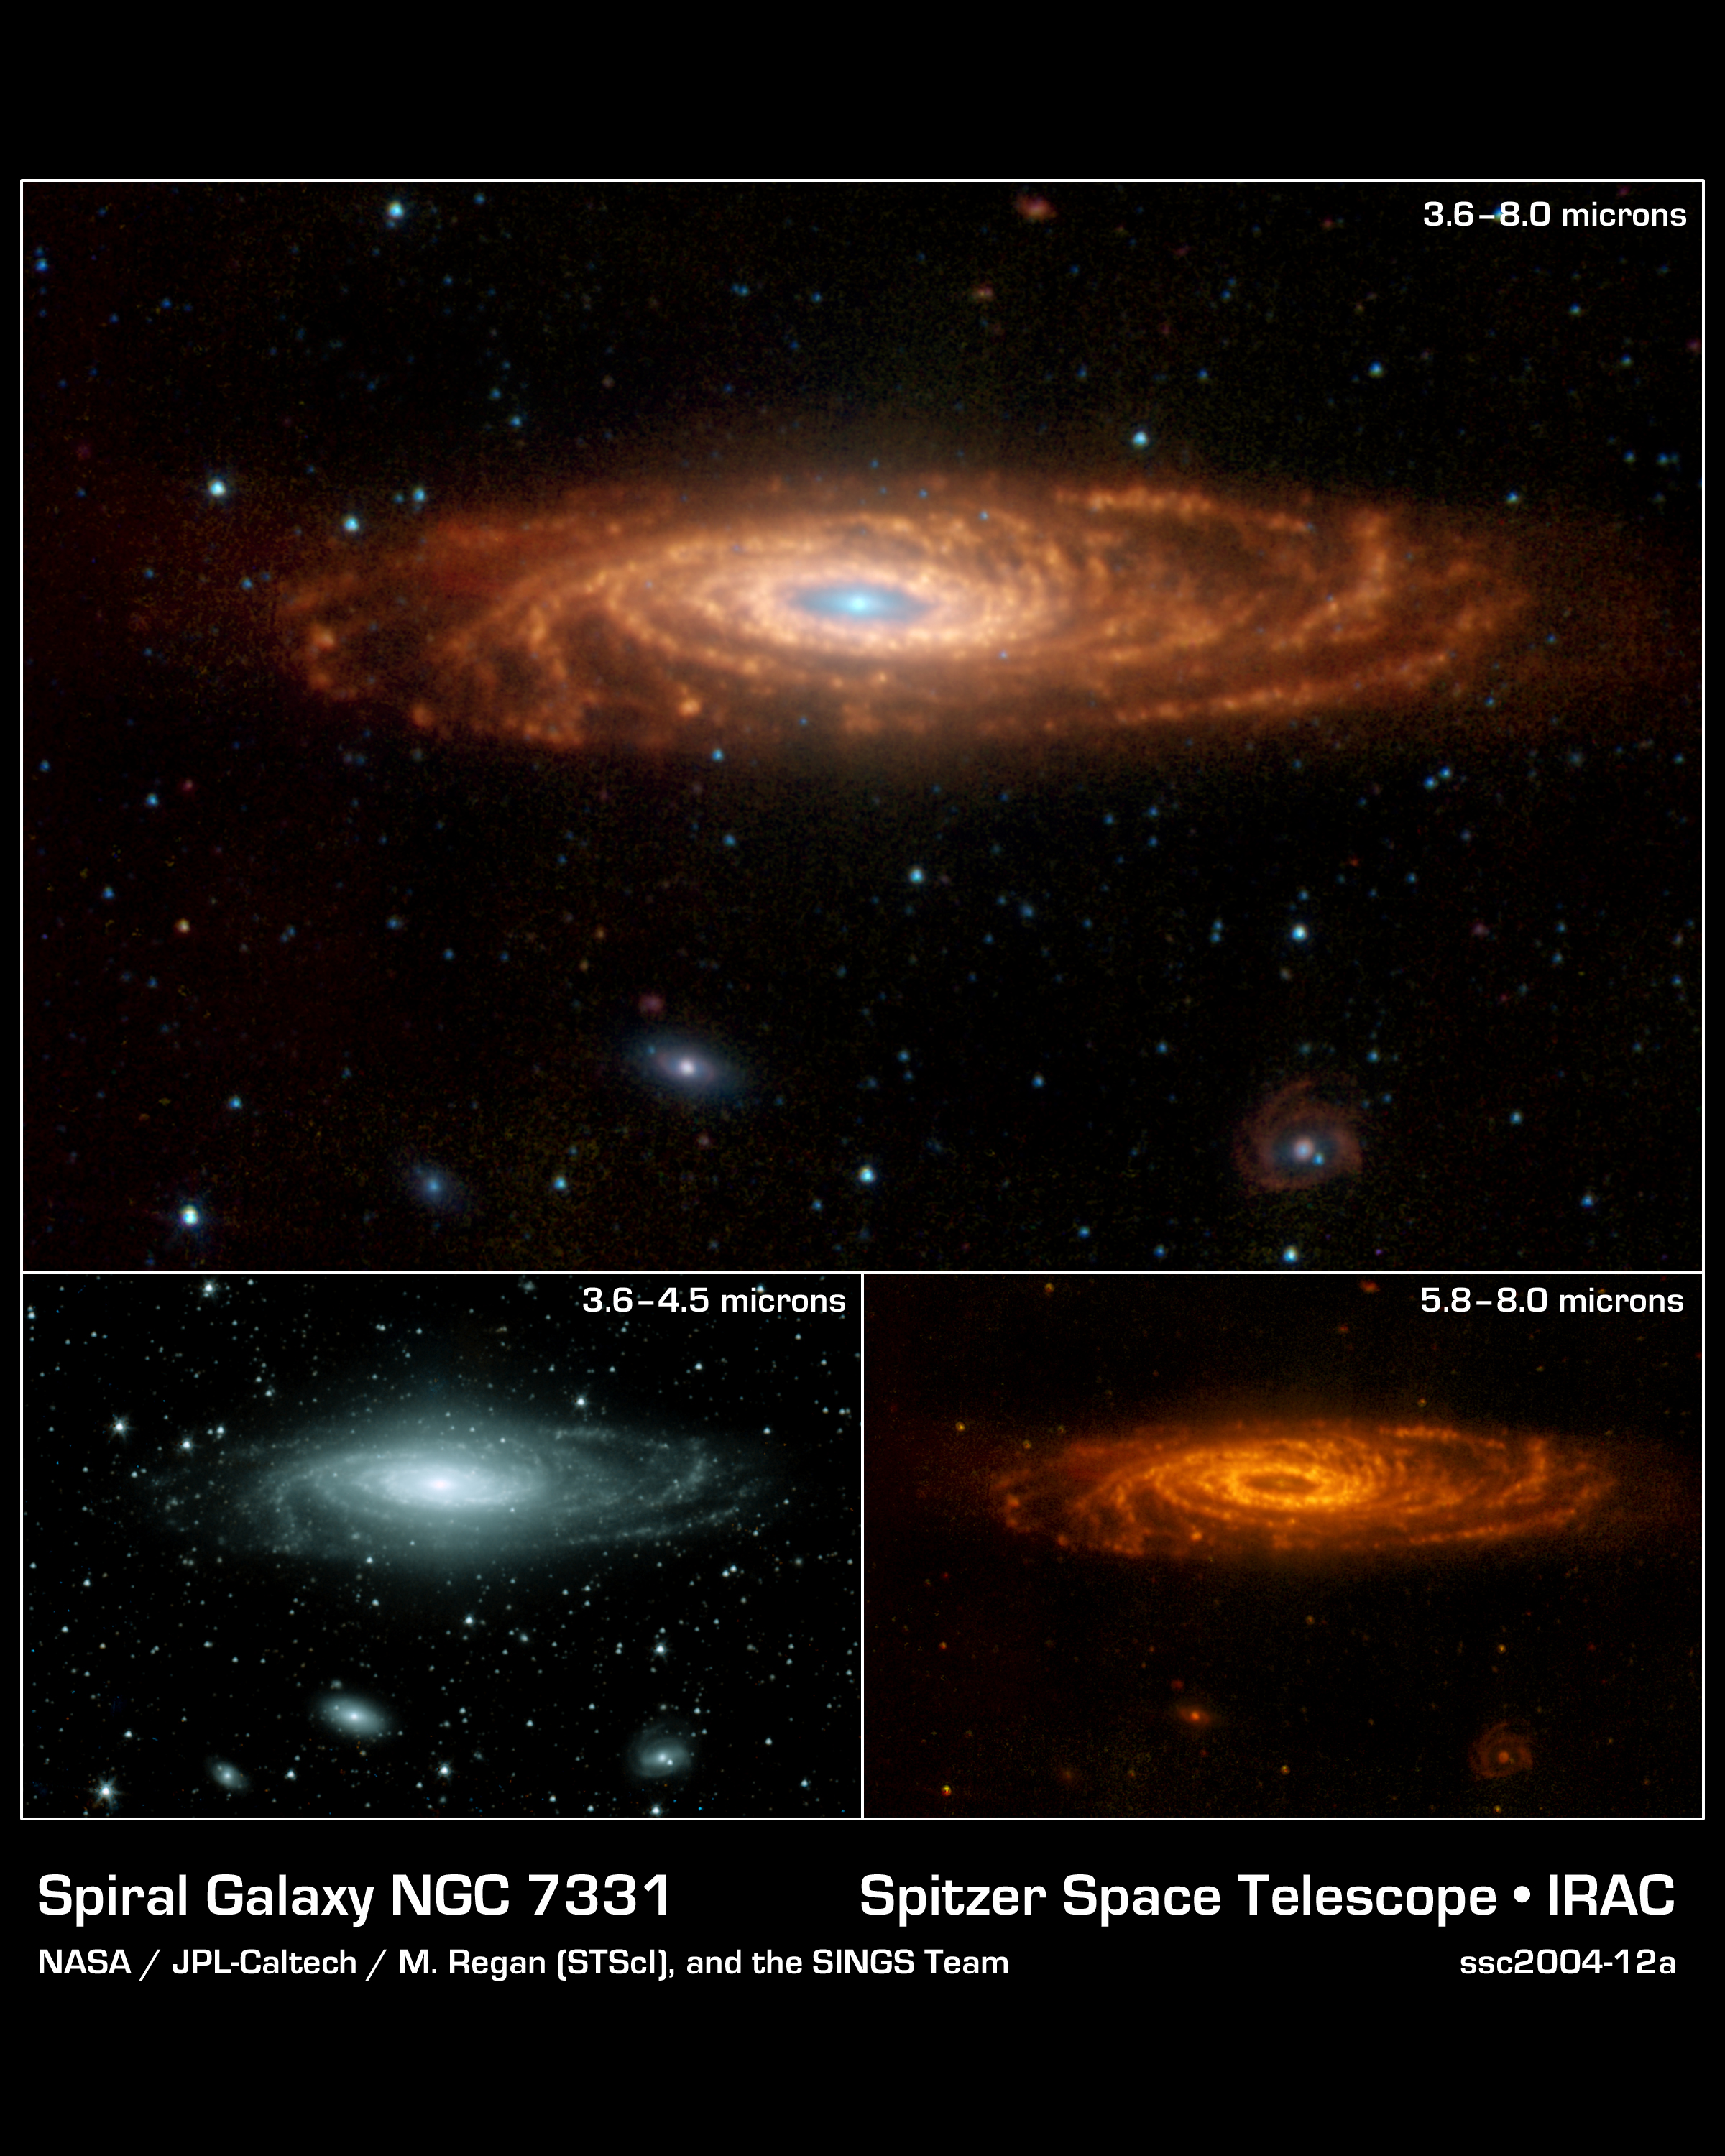 Spiral Galaxy NGC 7331